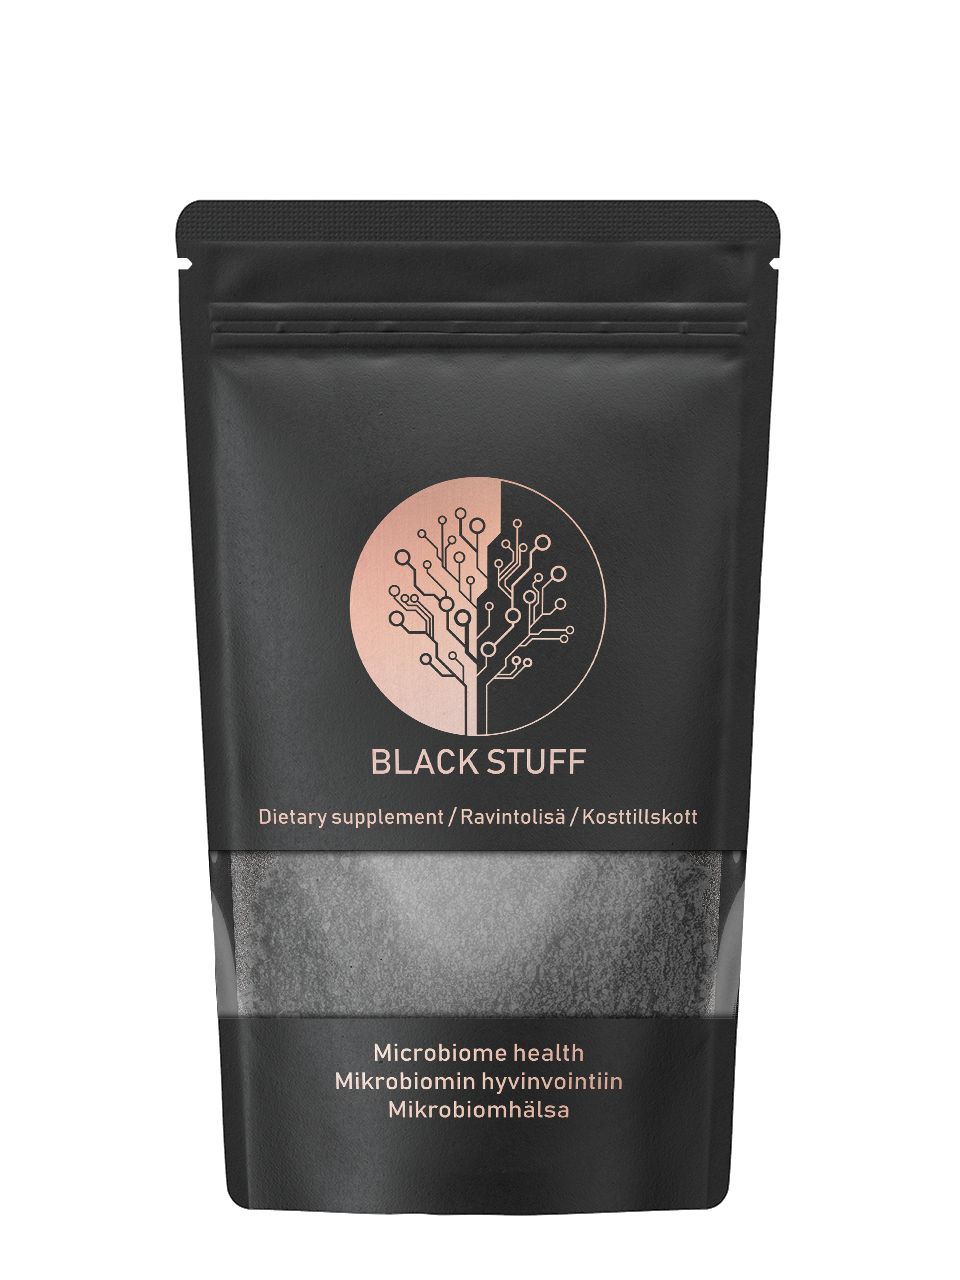 BLACK STUFF POWDER 60 servings - 2 month